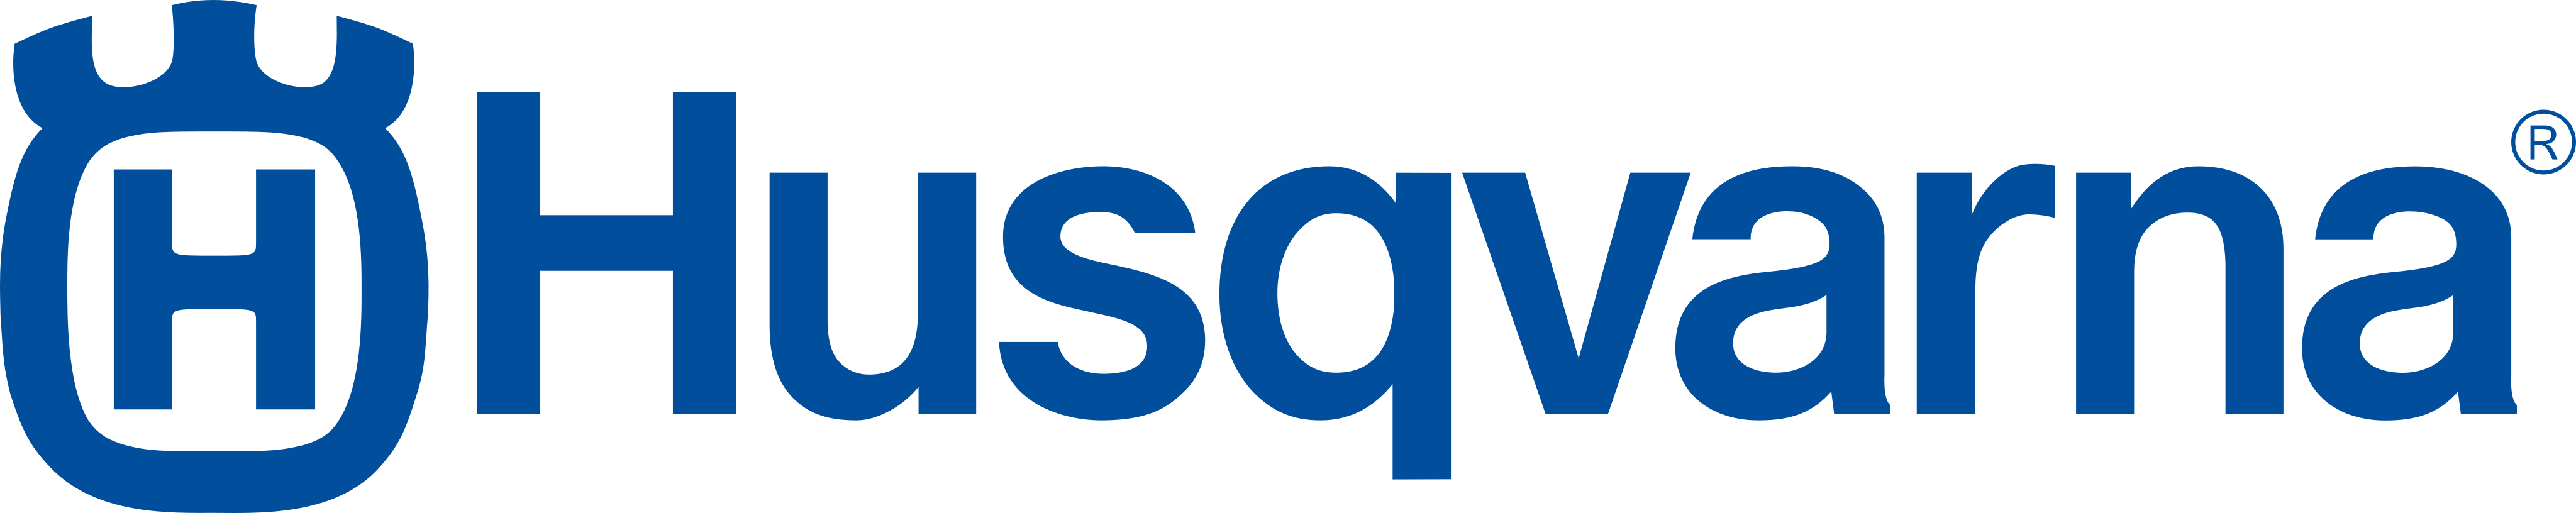 husqvarna logo - Husqvarna Logo